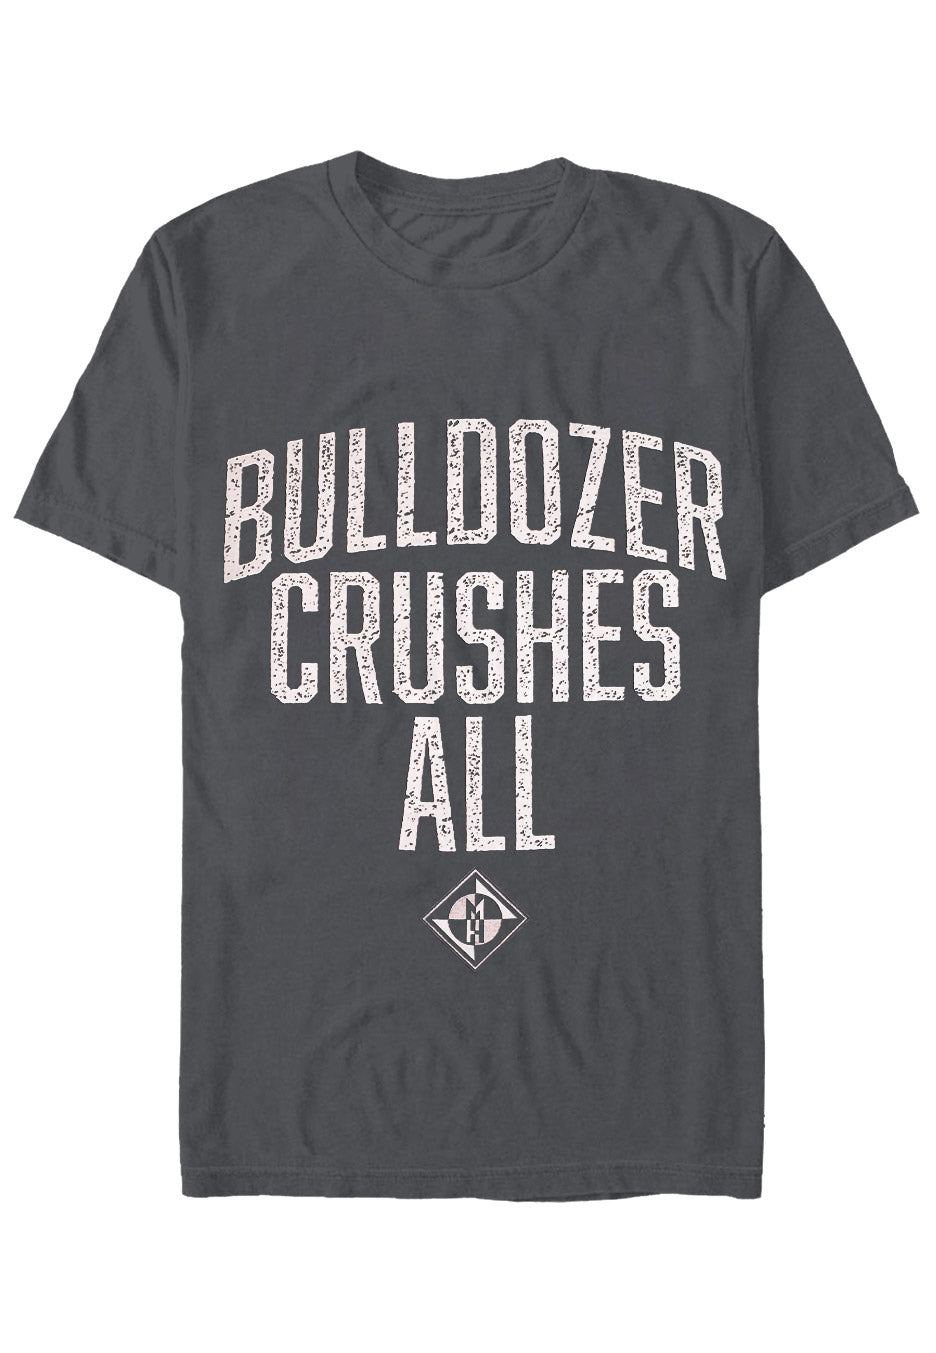 Machine Head - Bulldozer Grey - T-Shirt